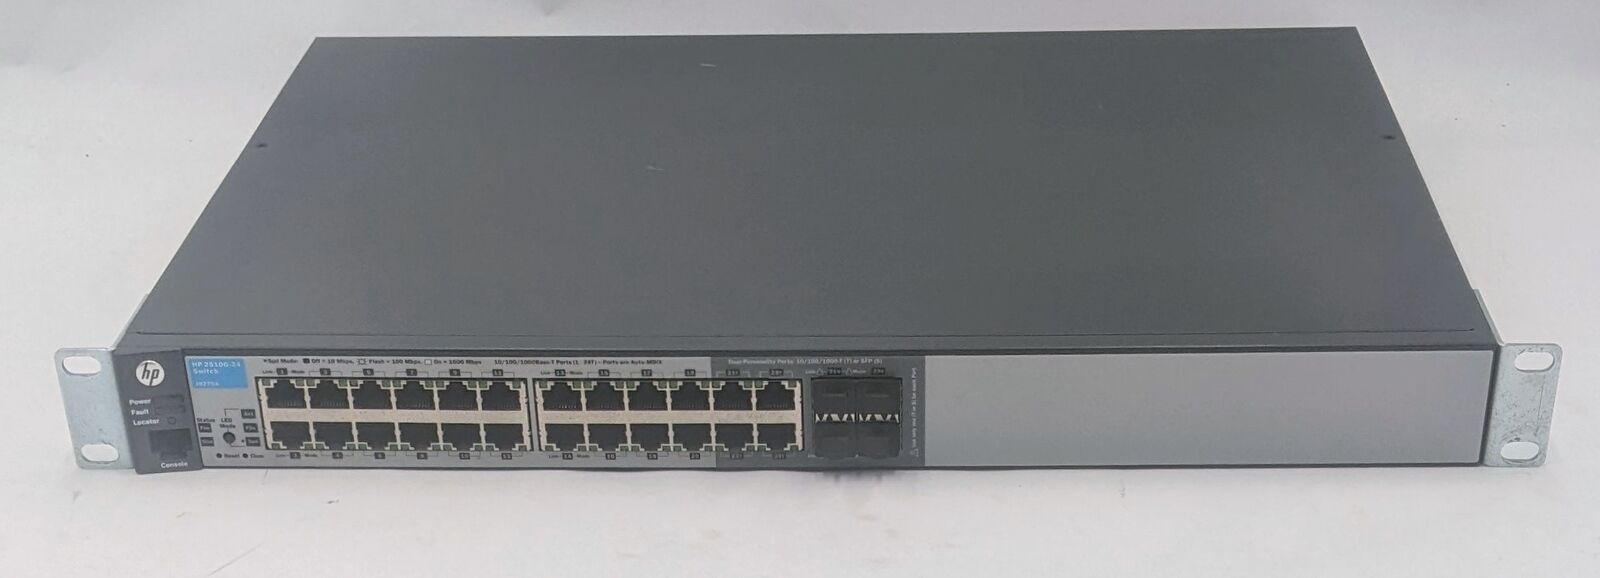 HP ProCurve 2510G-24 Network Switch- J9279A